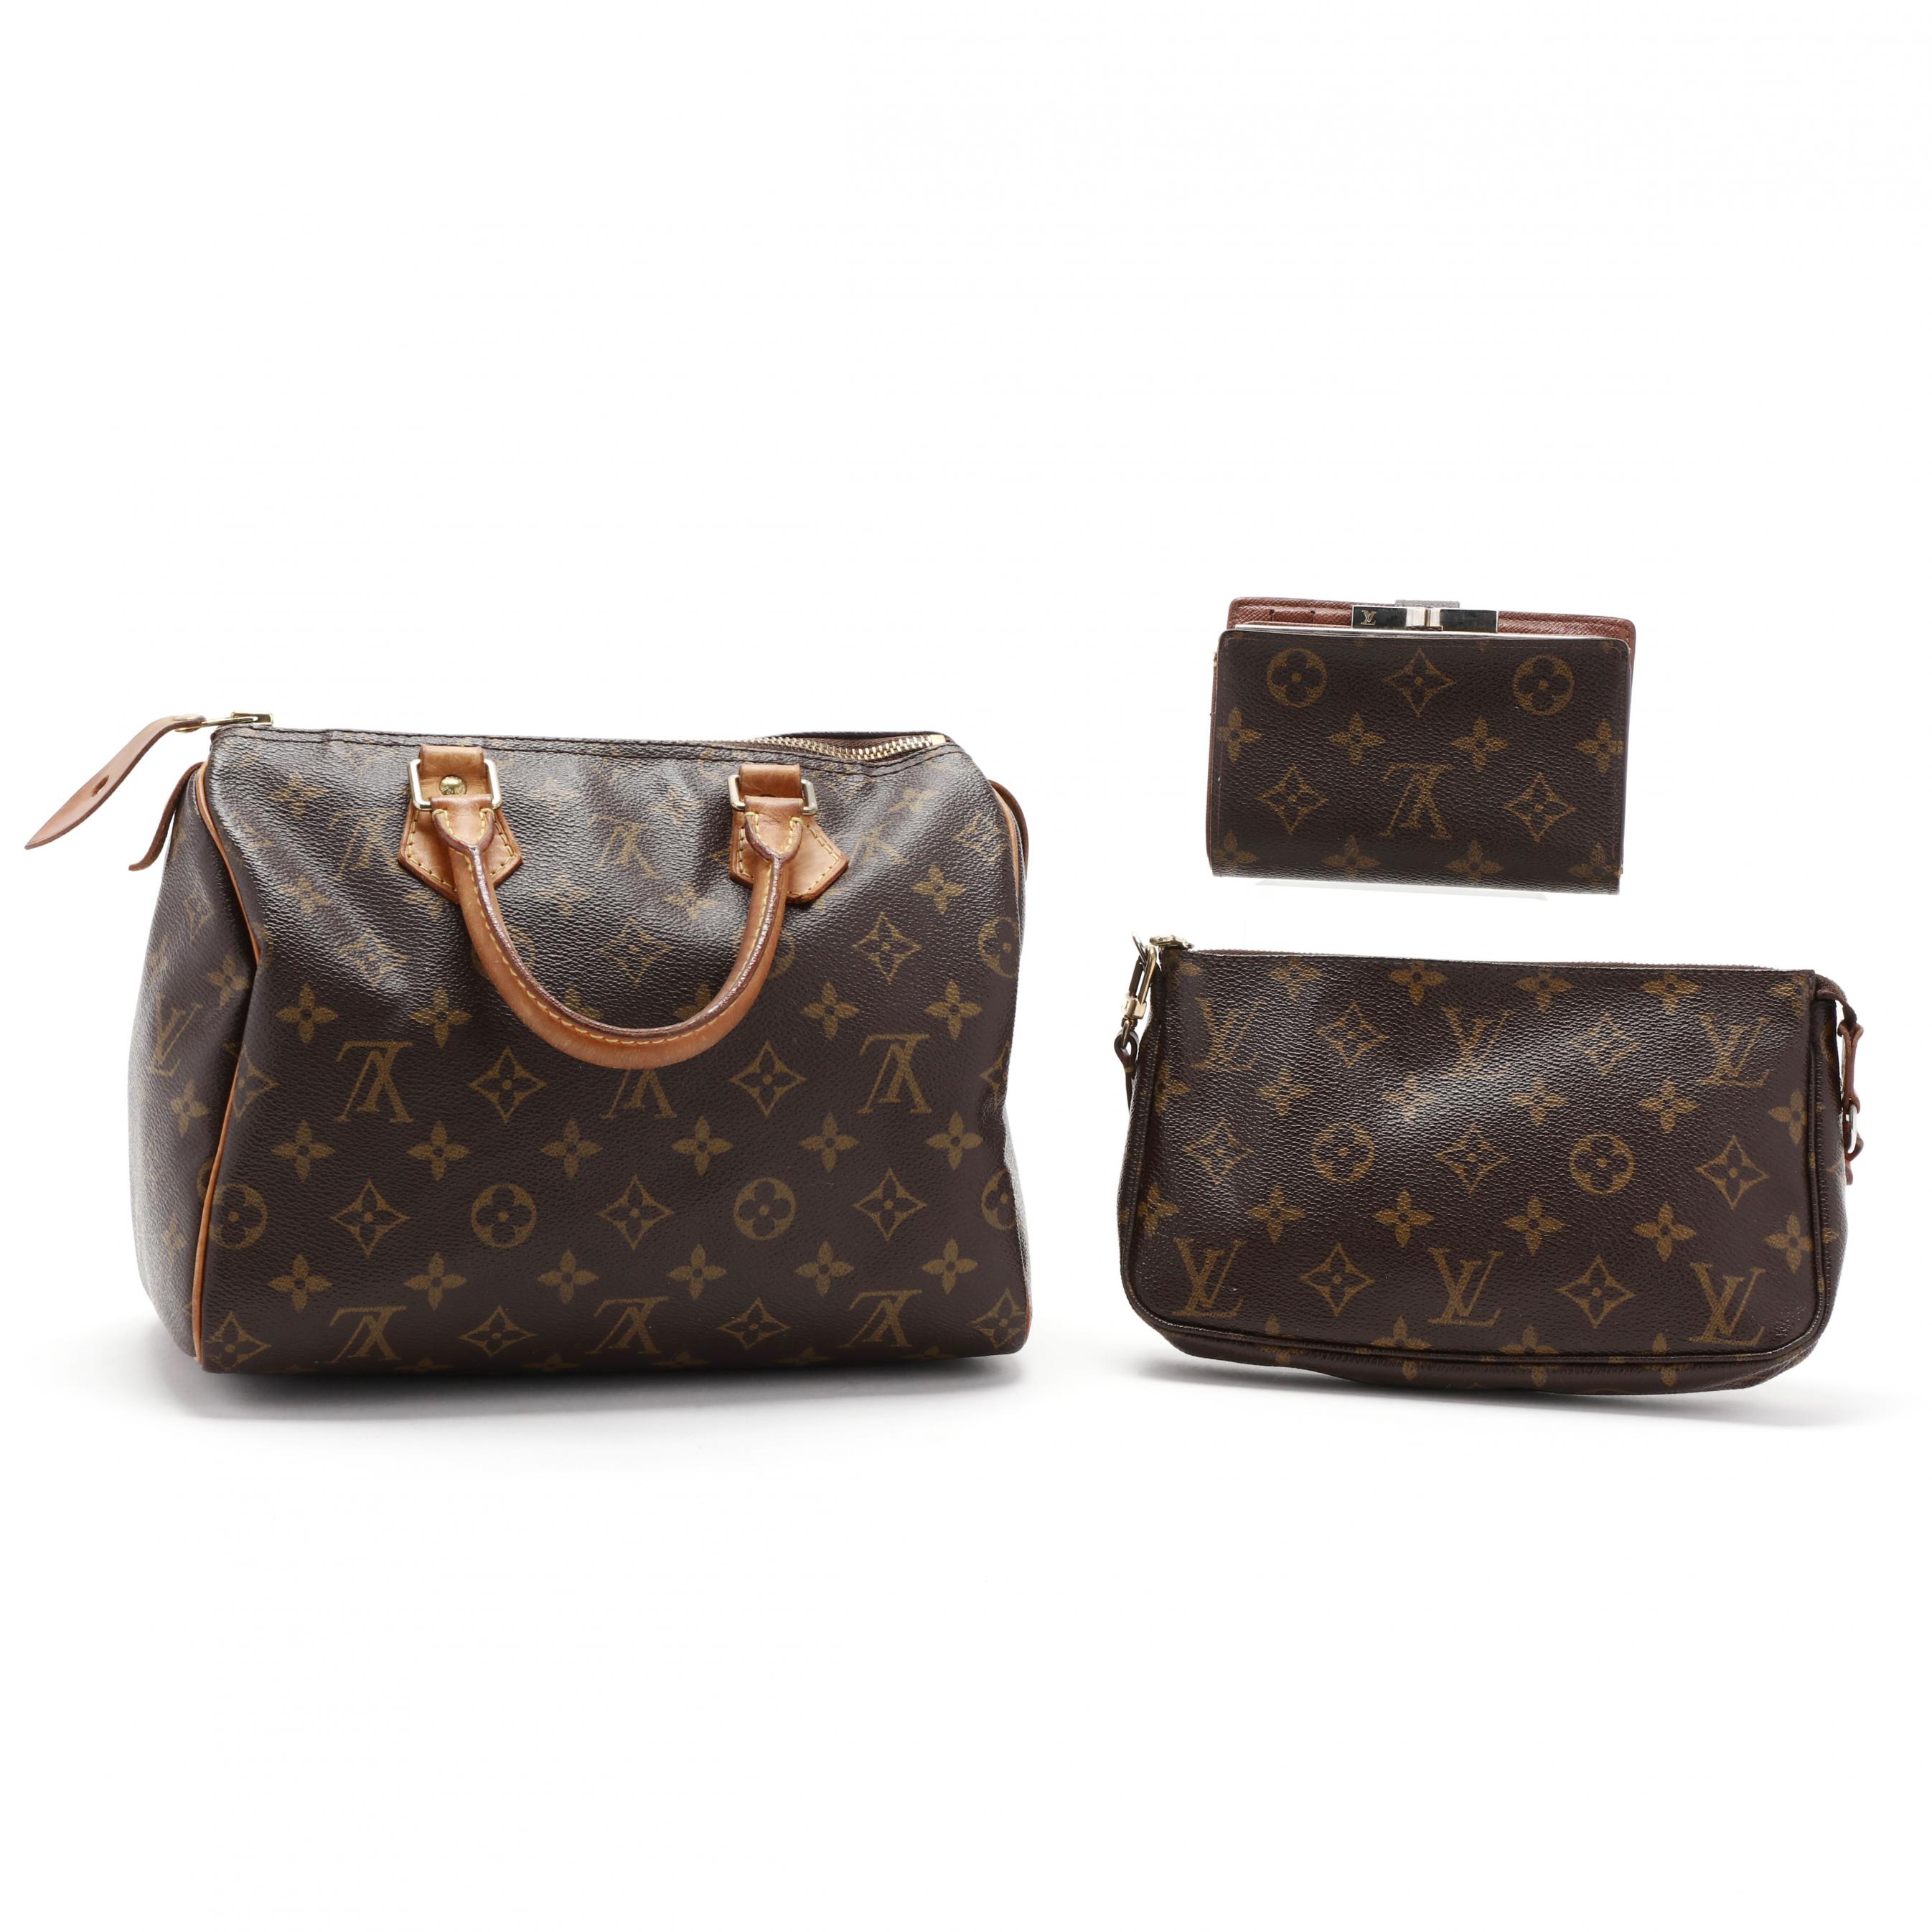 Sold at Auction: Louis Vuitton, Vintage bag by Louis Vuitton model, Speedy  30